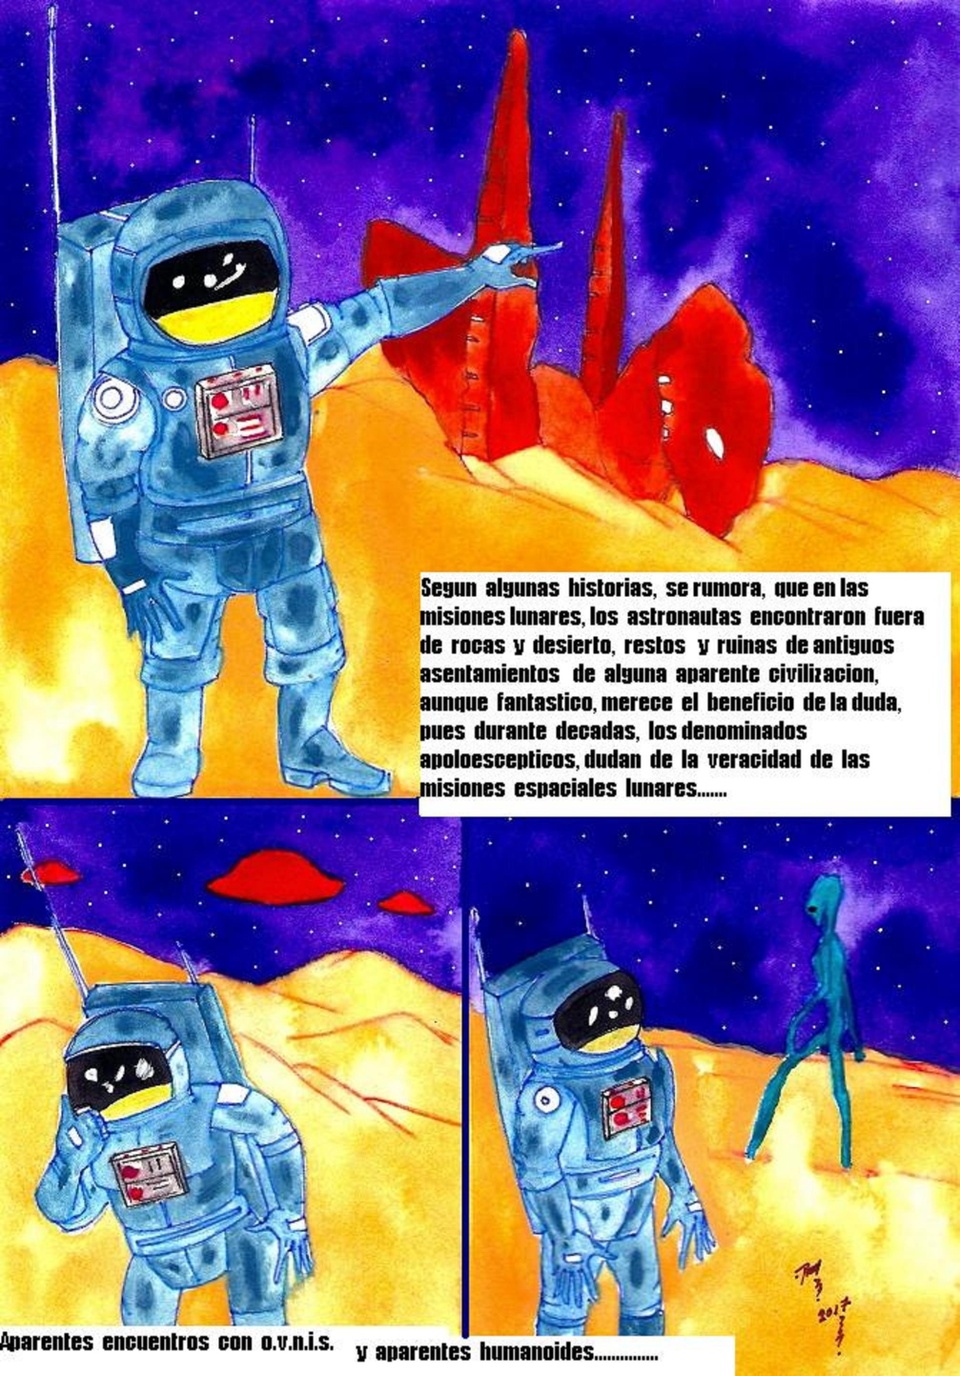 el cosmonauta